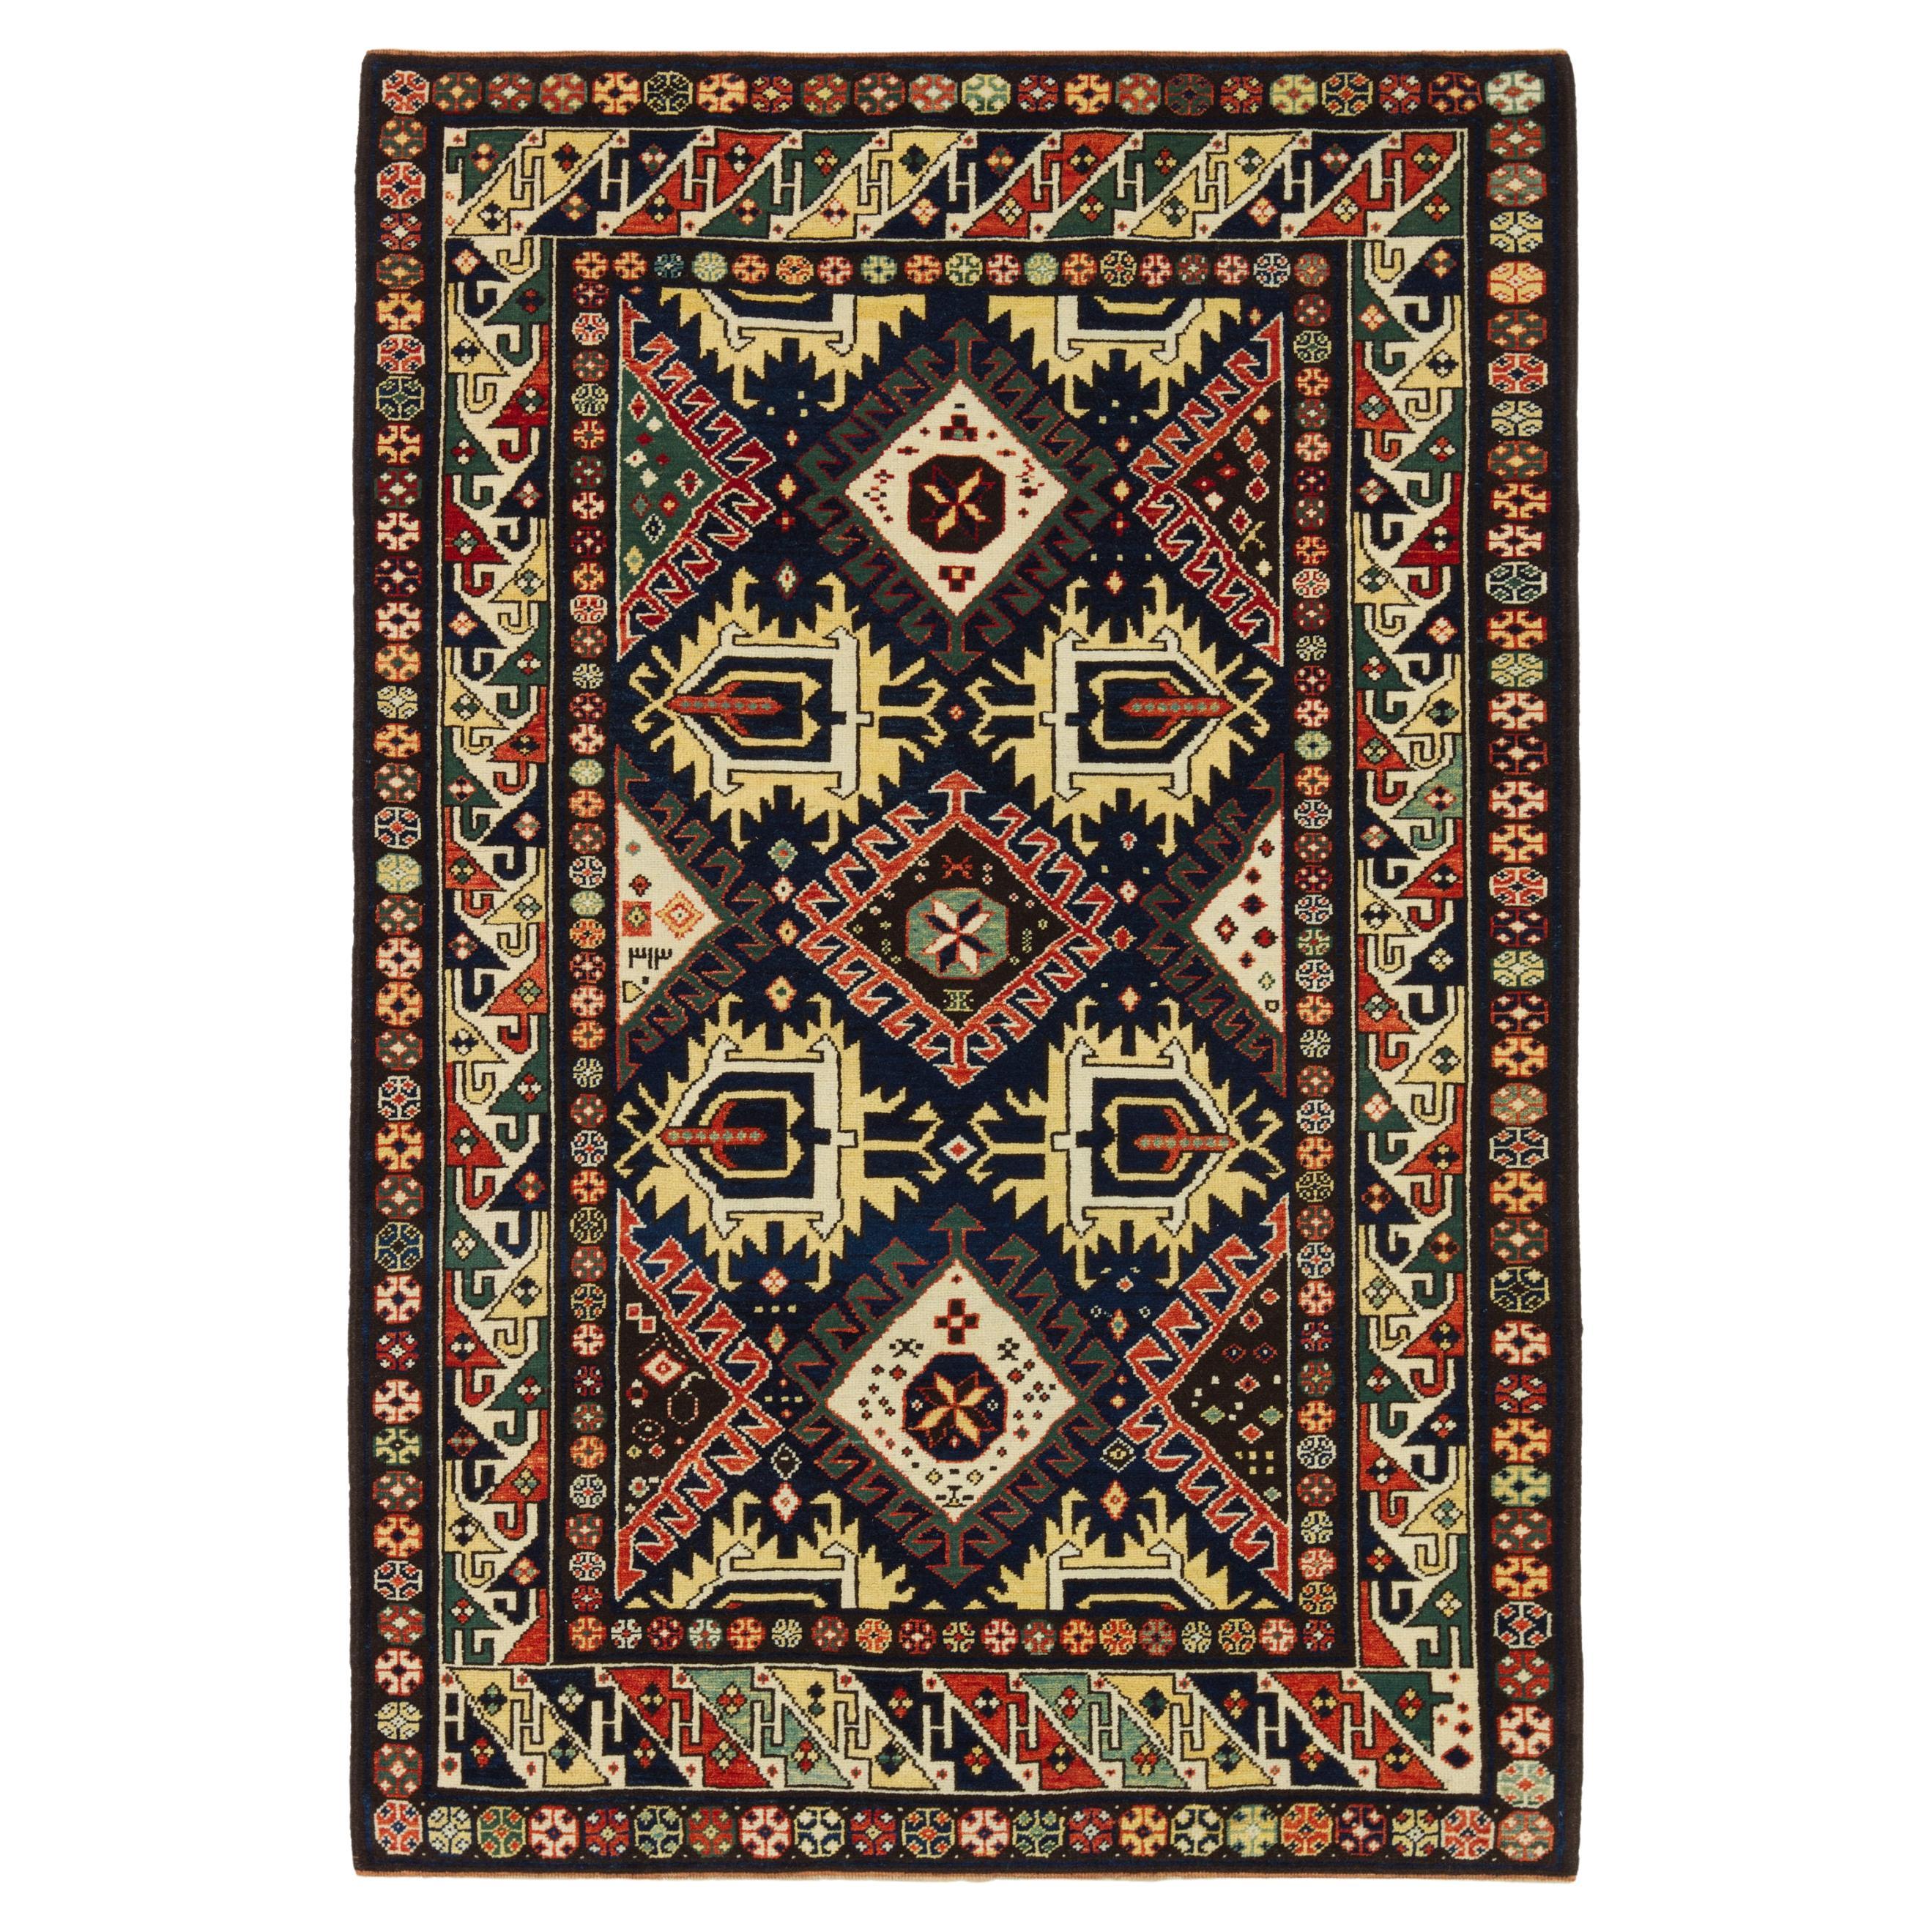 Ararat Rugs Derbend Kazak Rug, 19th C. Caucasian Revival Carpet Natural Dyed For Sale